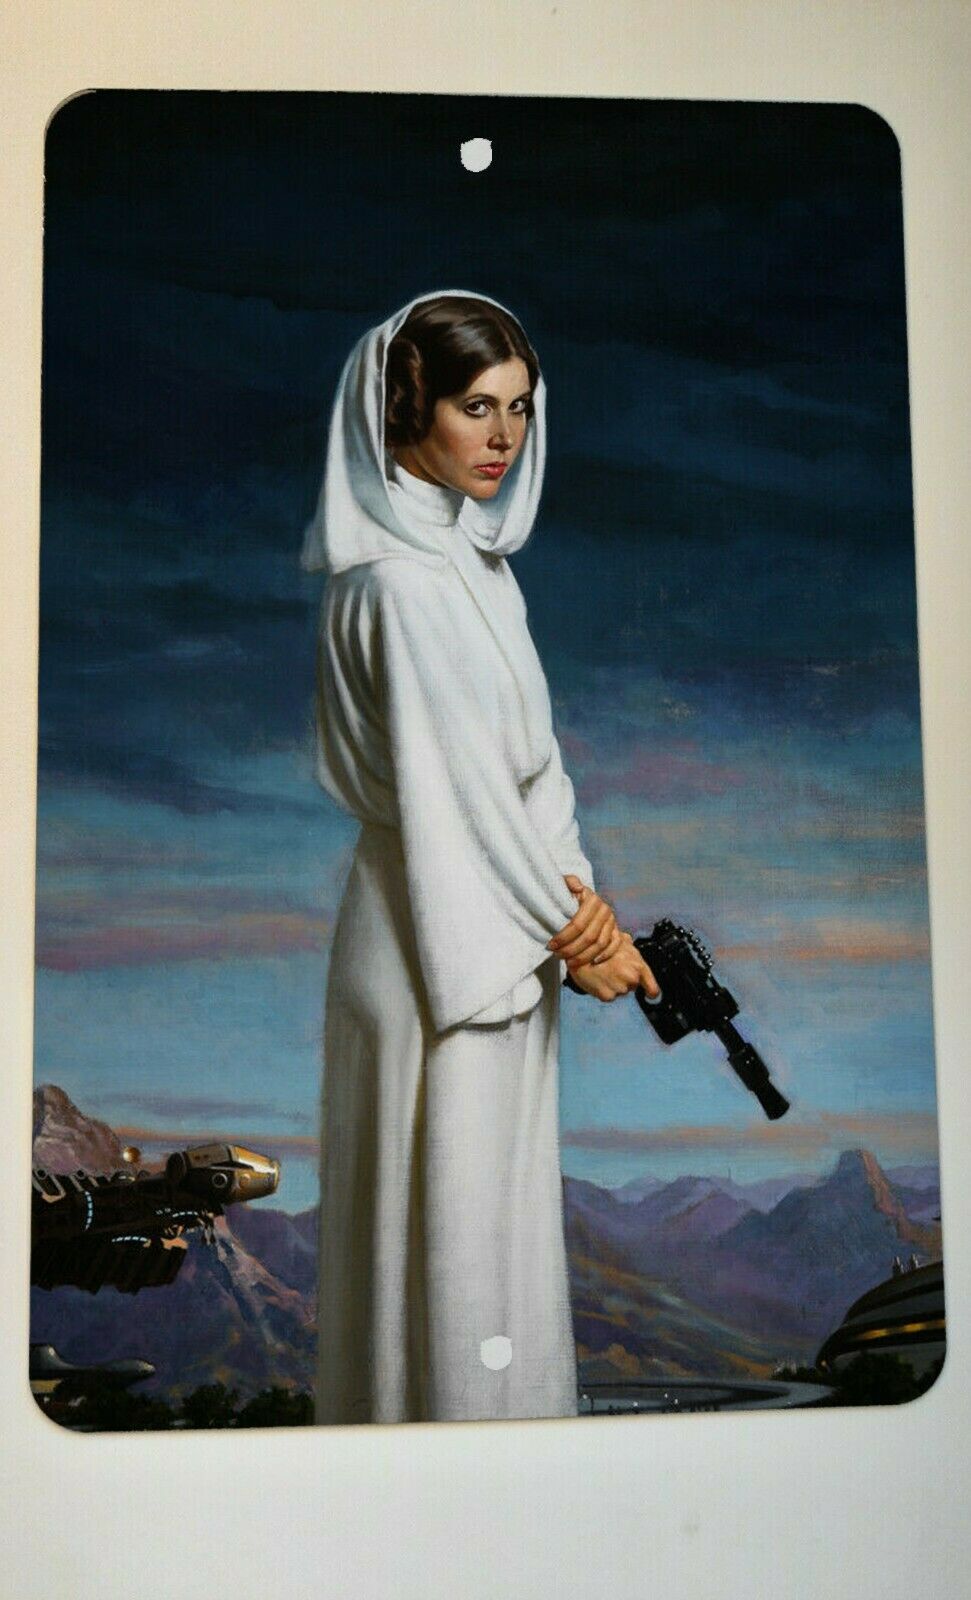 Princess Leia Star Wars 8x12 Metal Wall Sign Retro 80s Sci-Fi Movie Poster